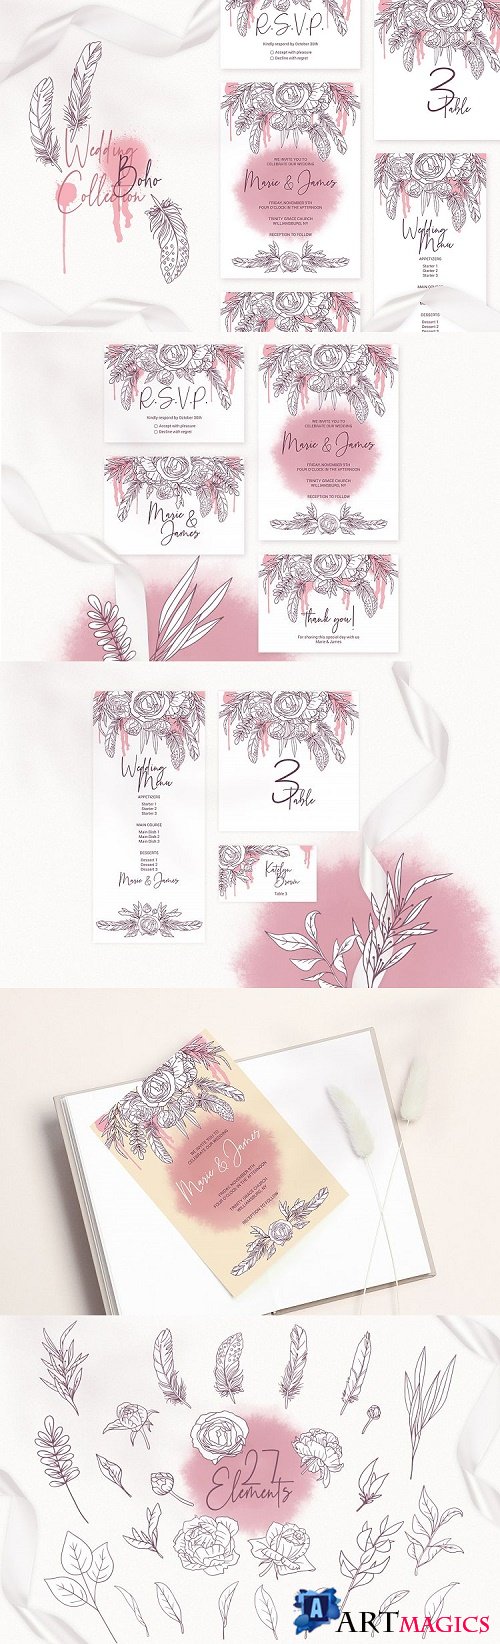 Boho Wedding Invitation Cards. Floral Printable Template - 457708